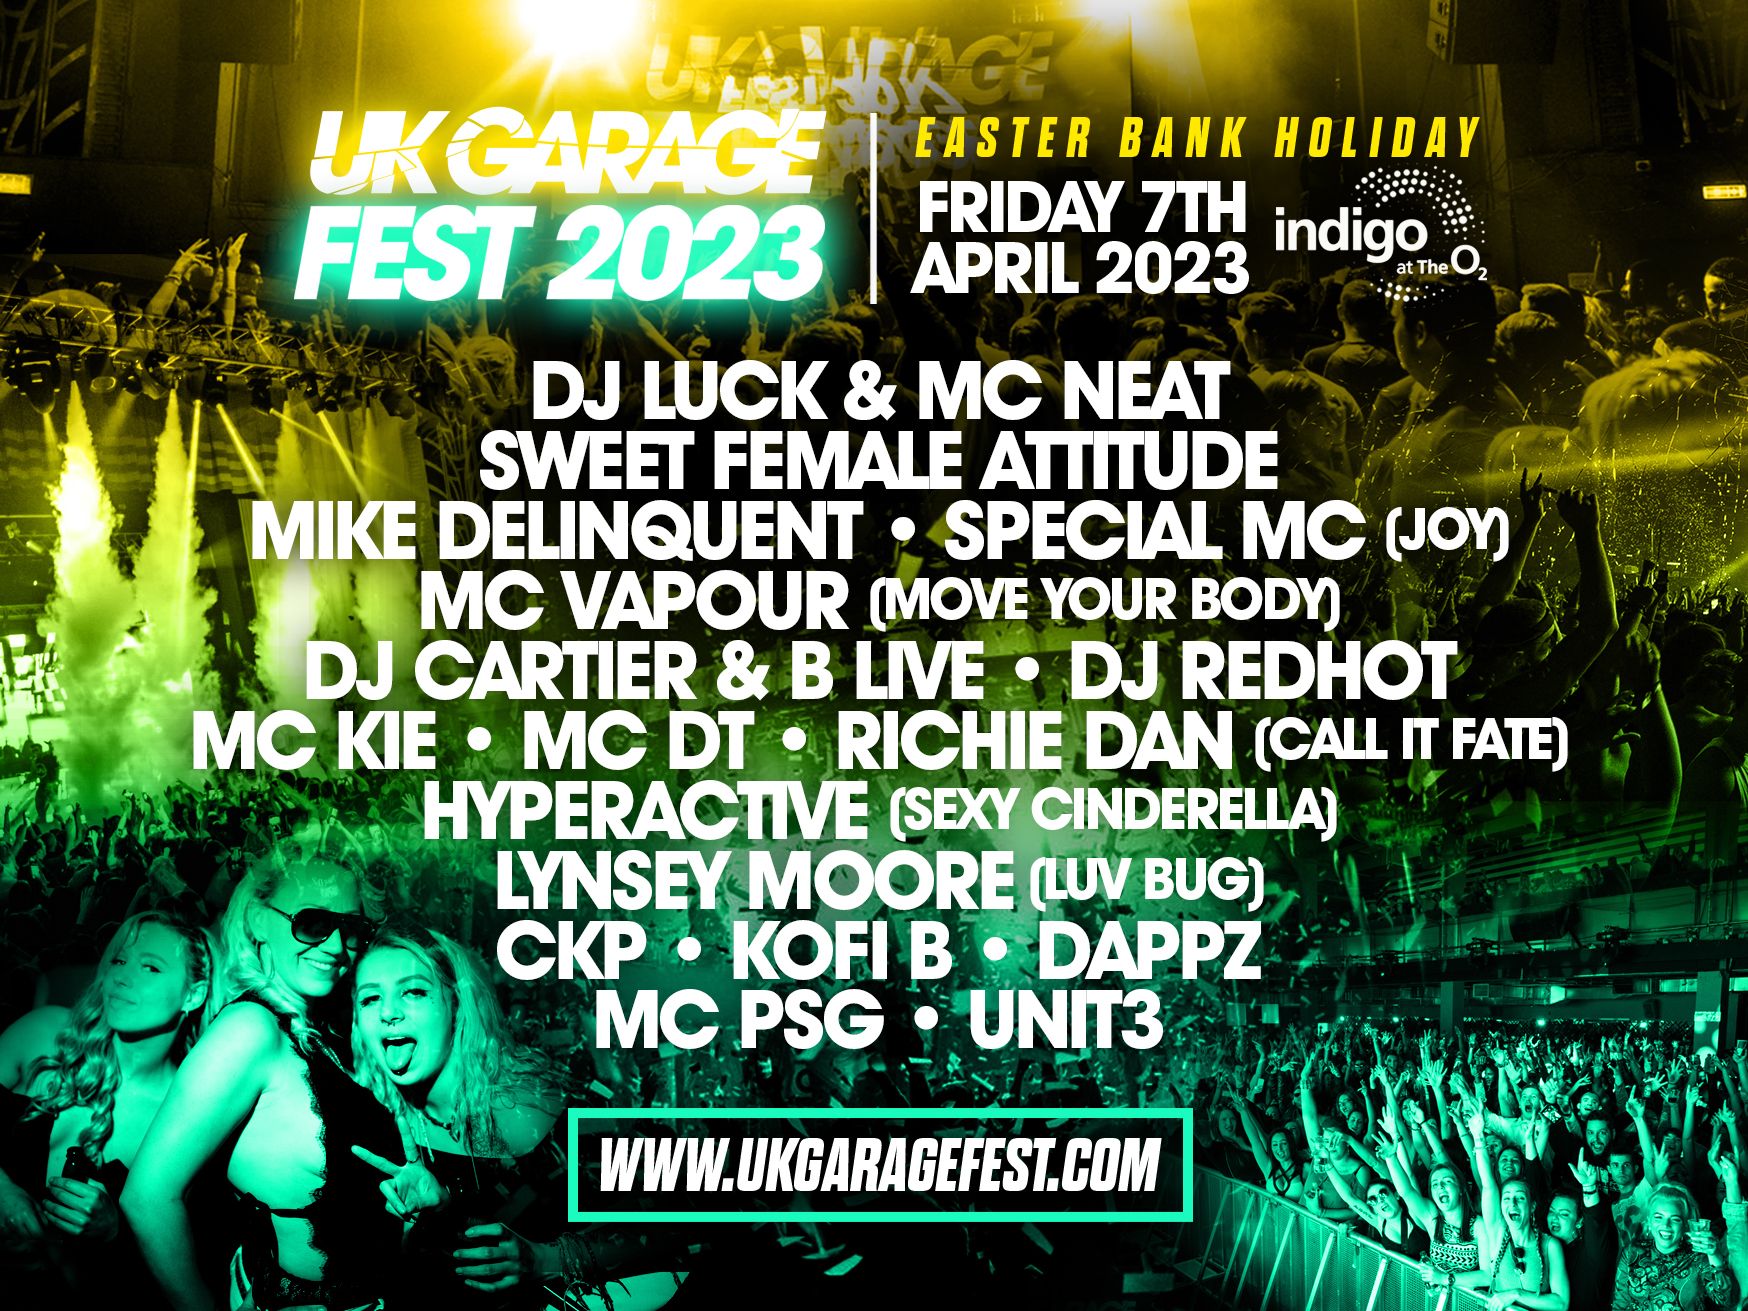 UK Garage Fest 2023 at Indigo at The O₂, London on 7th Apr 2023 Fatsoma